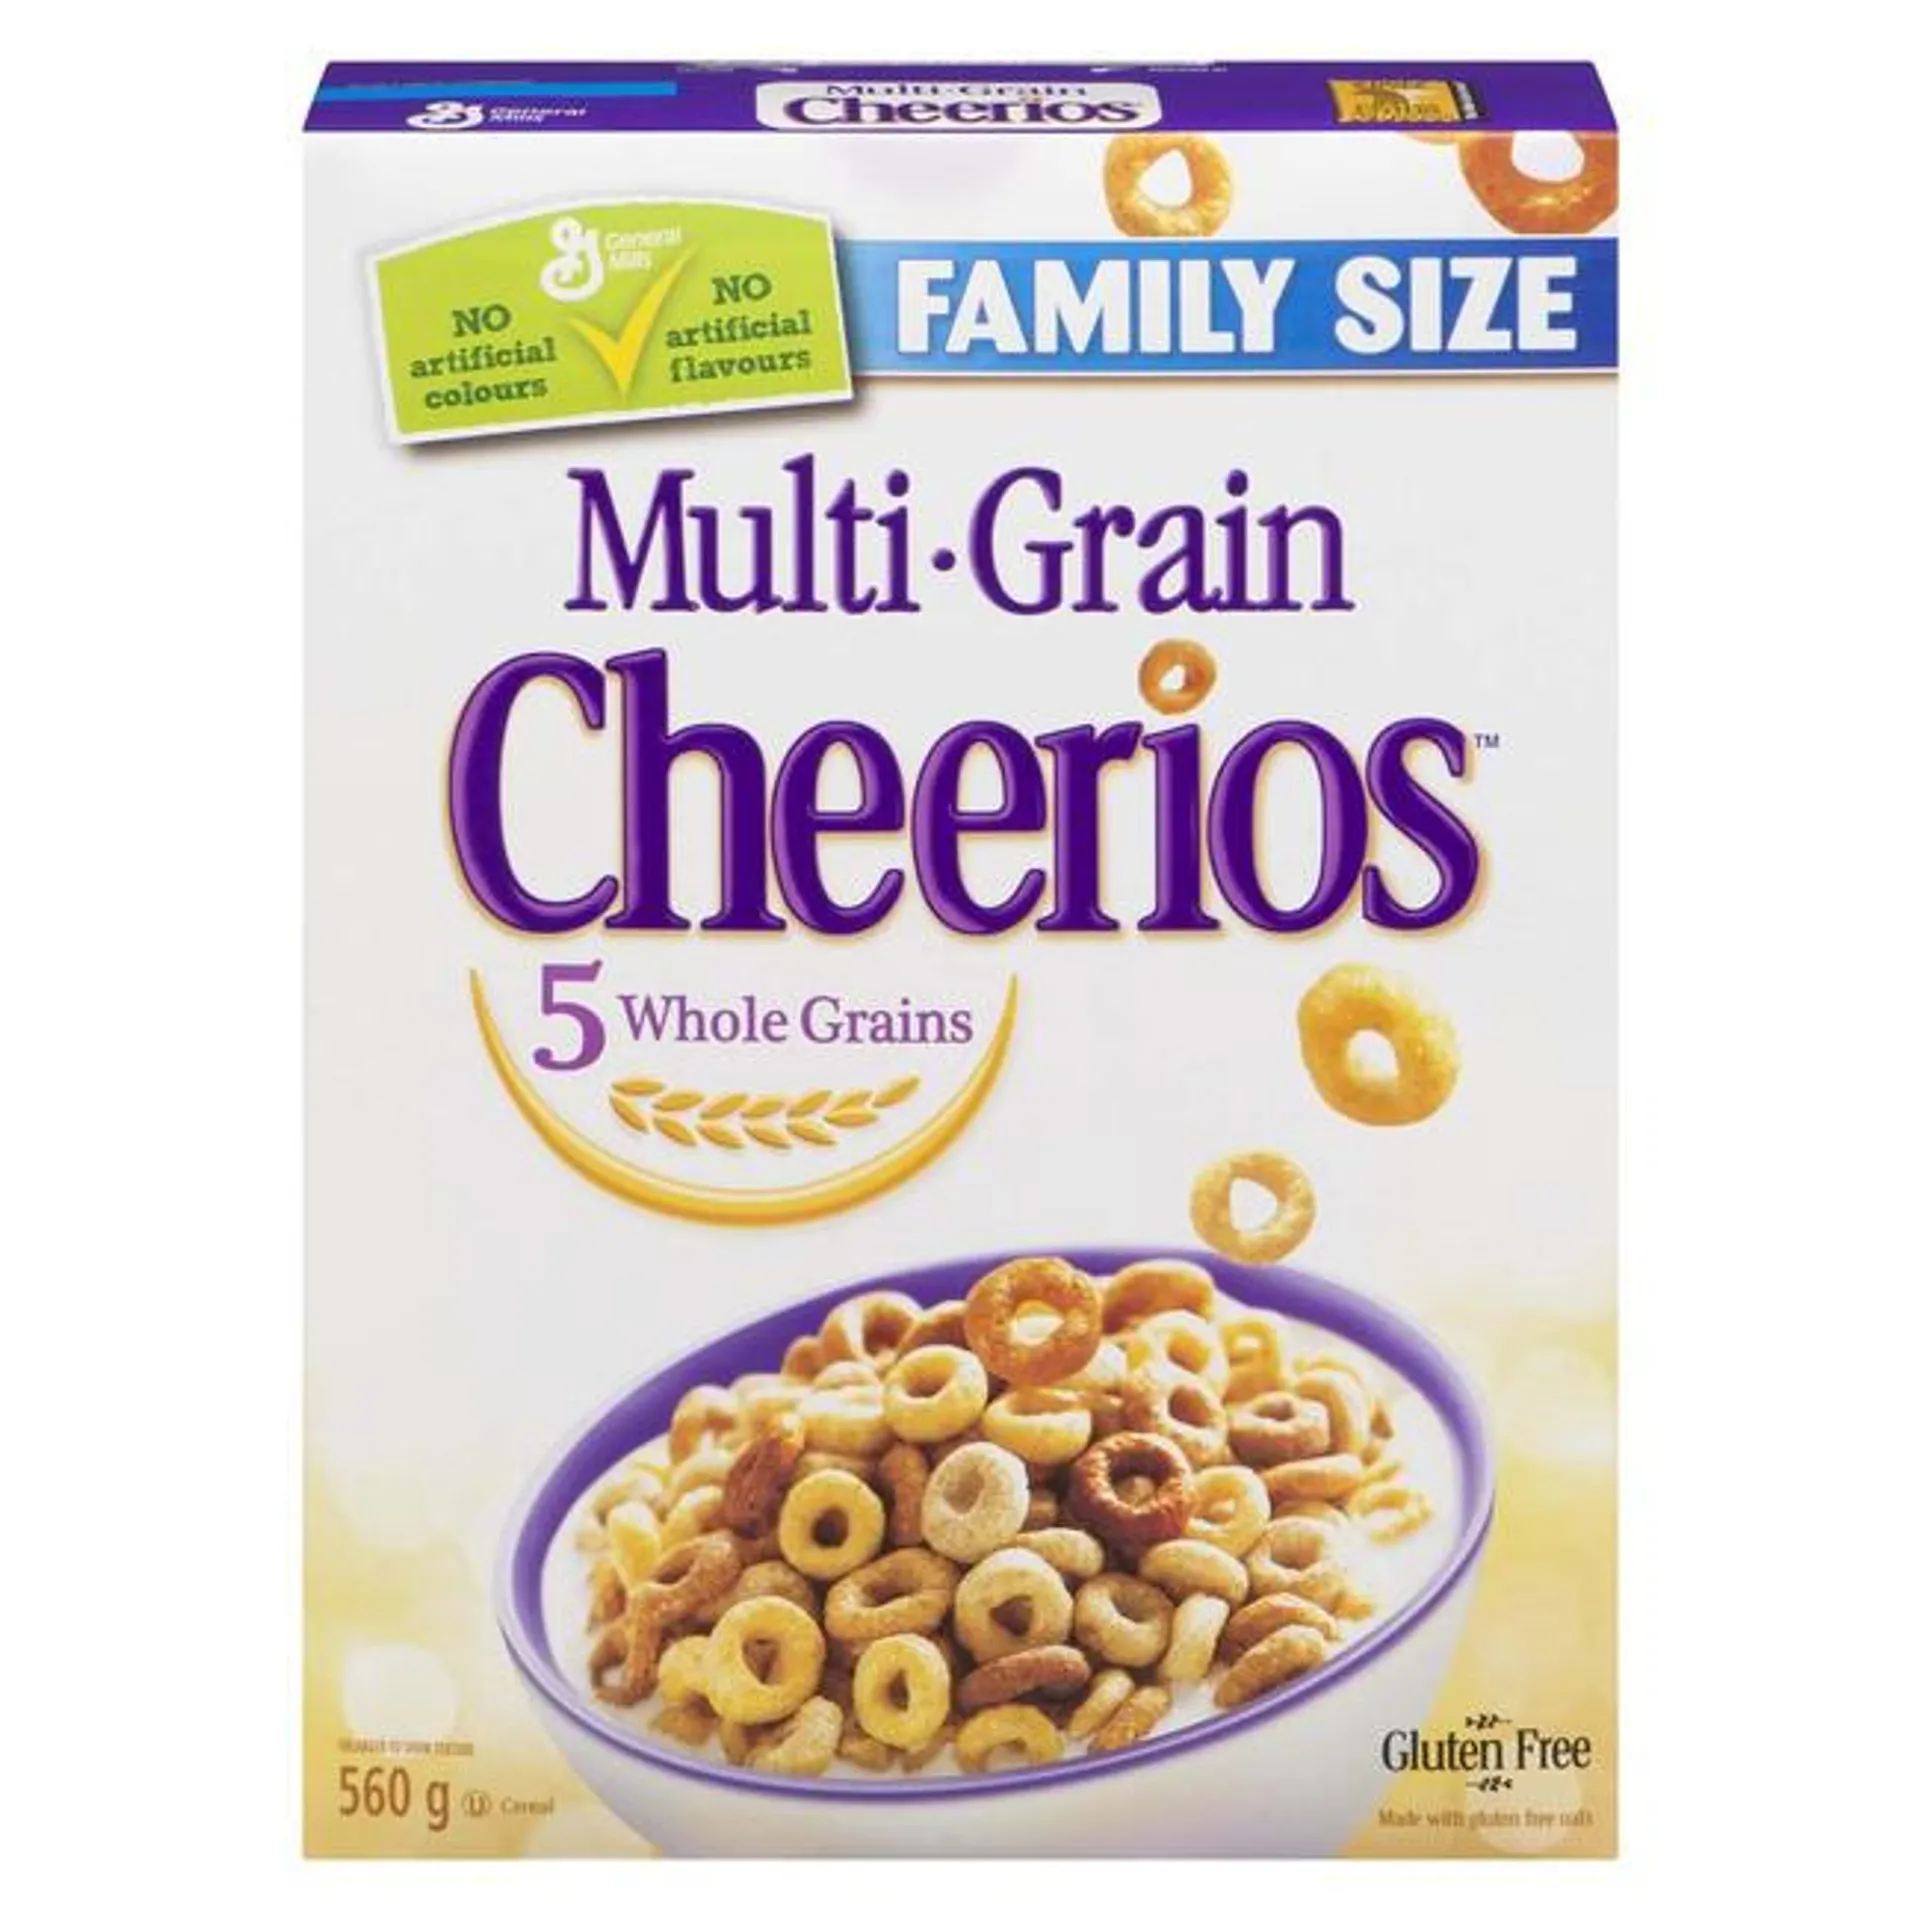 Cheerios Cereal Multi-Grain Family Size 560 g